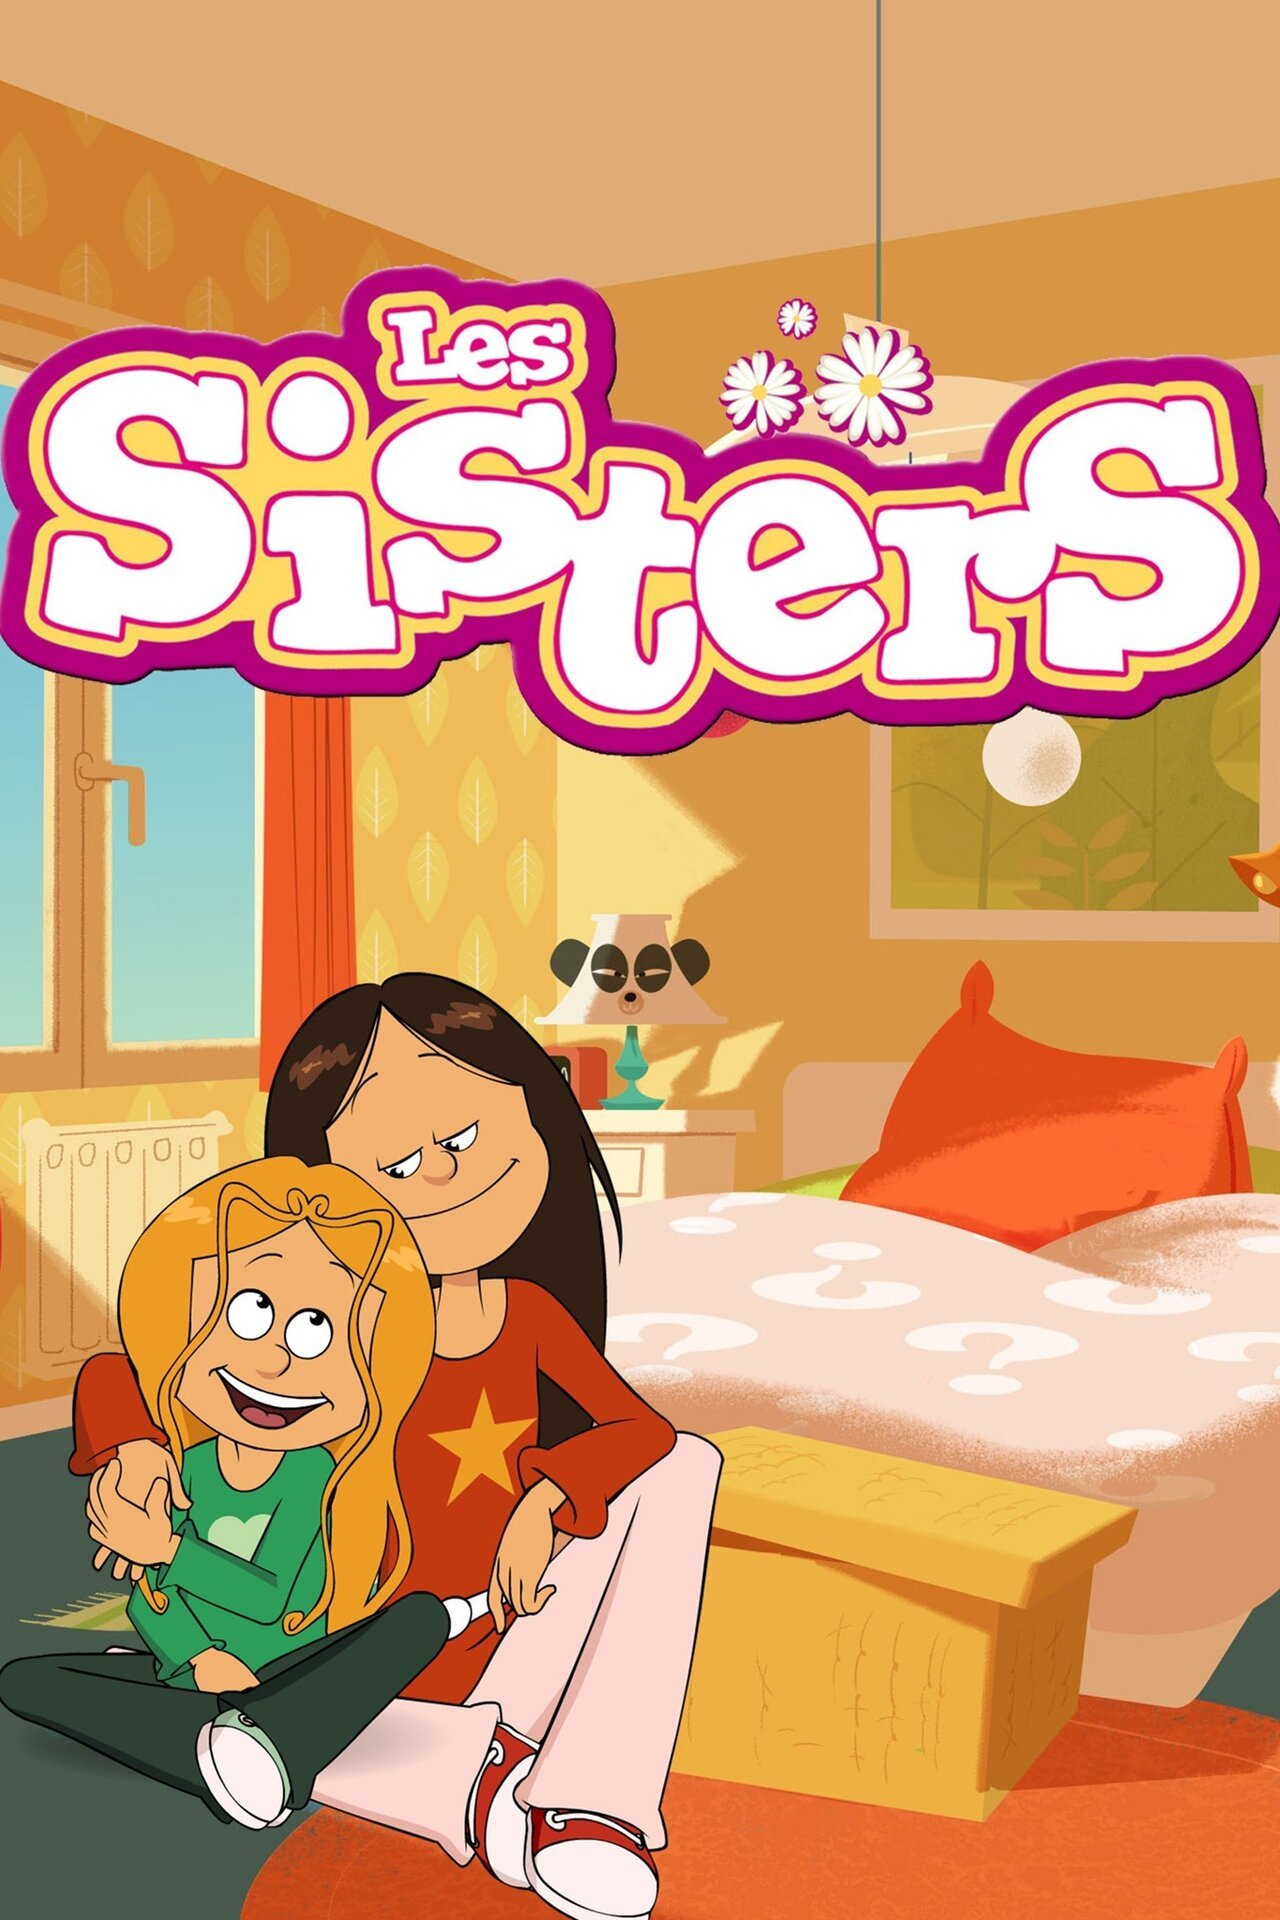 Les sisters